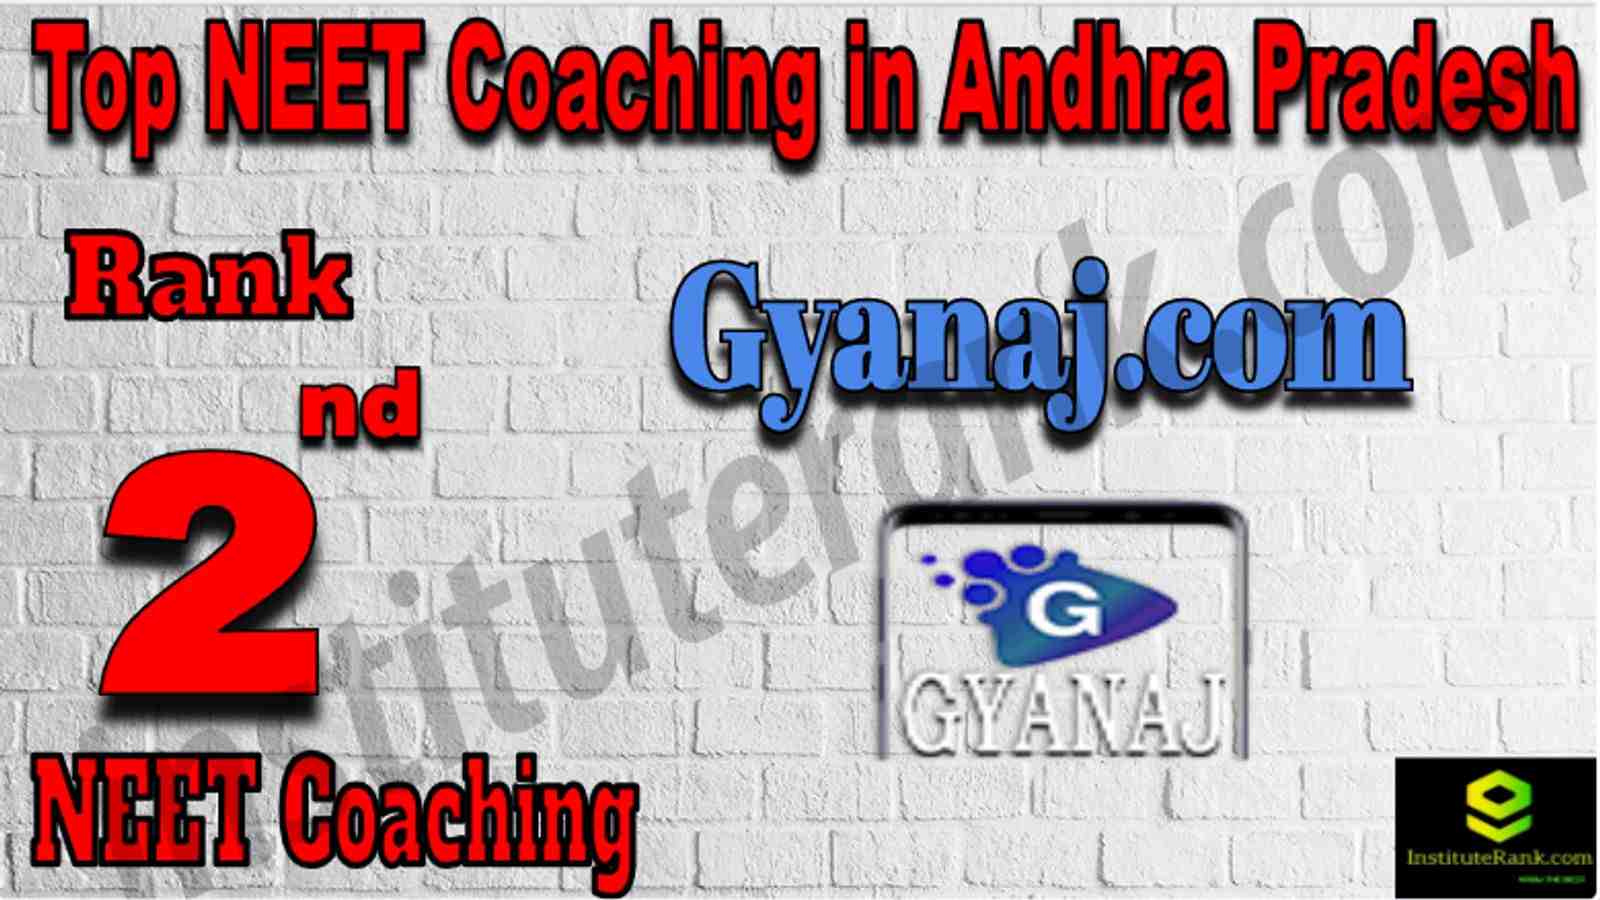 Rank 2 Top NEET Coaching in Andhra Pradesh